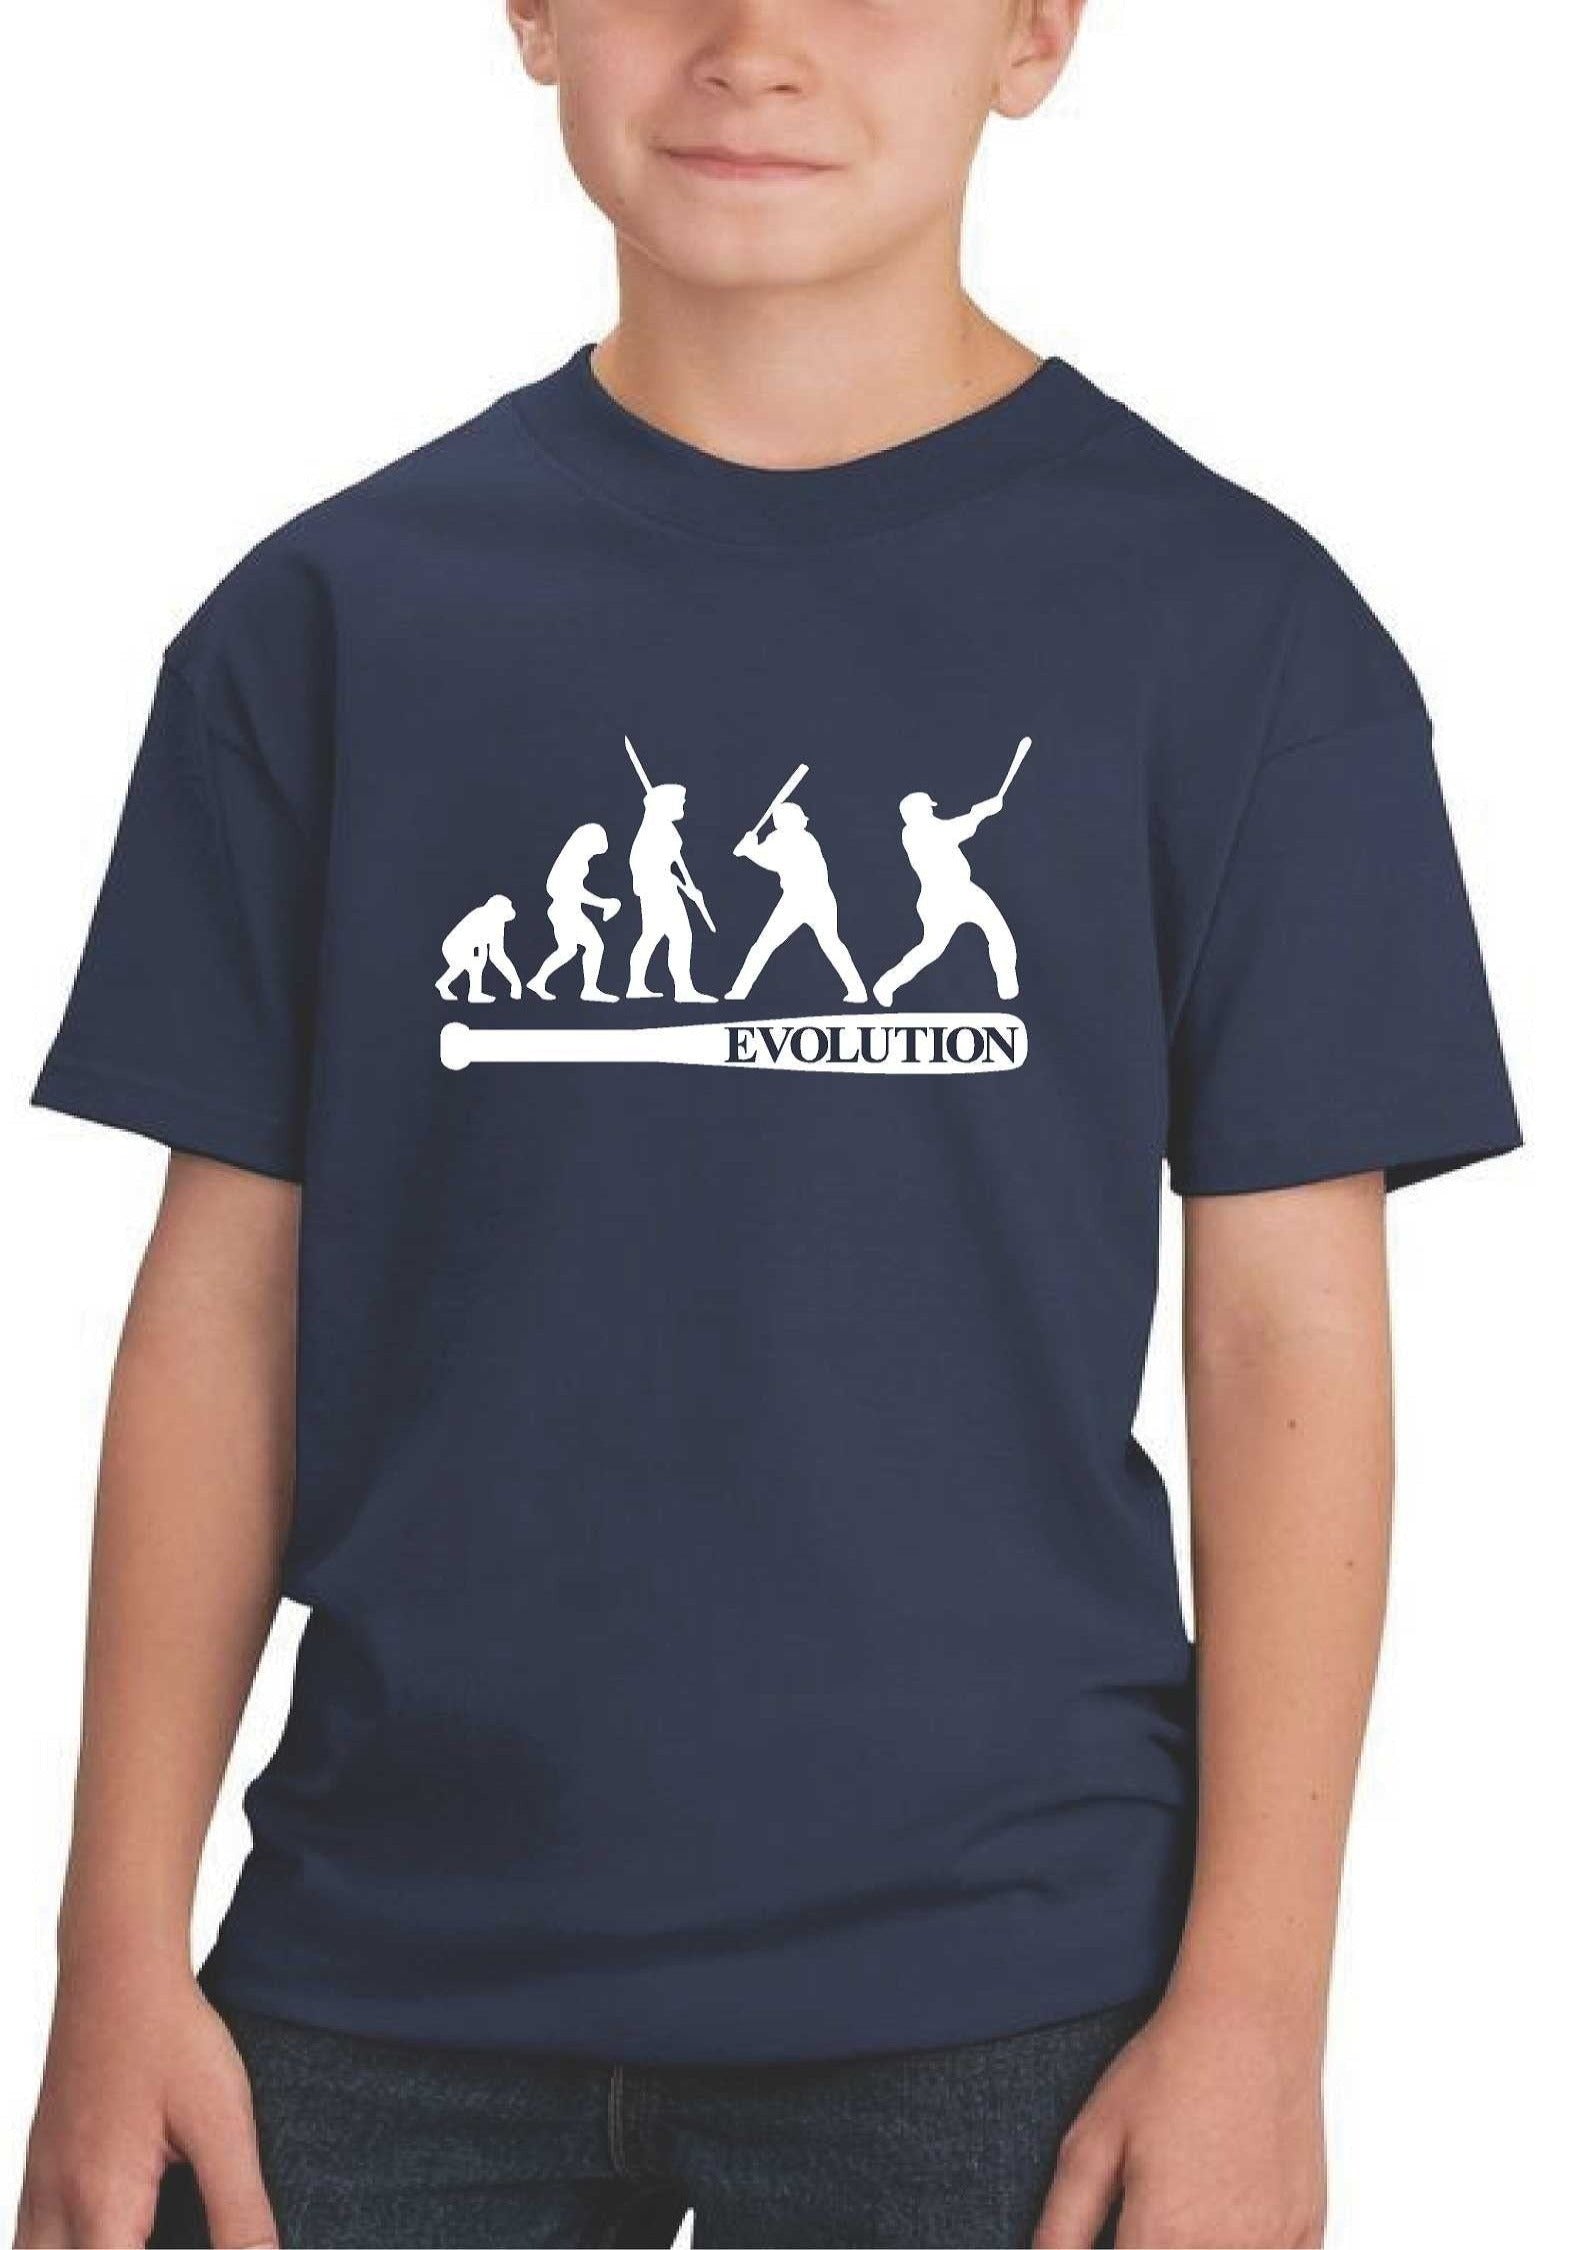 Kids Baseball Tops & T-Shirts.